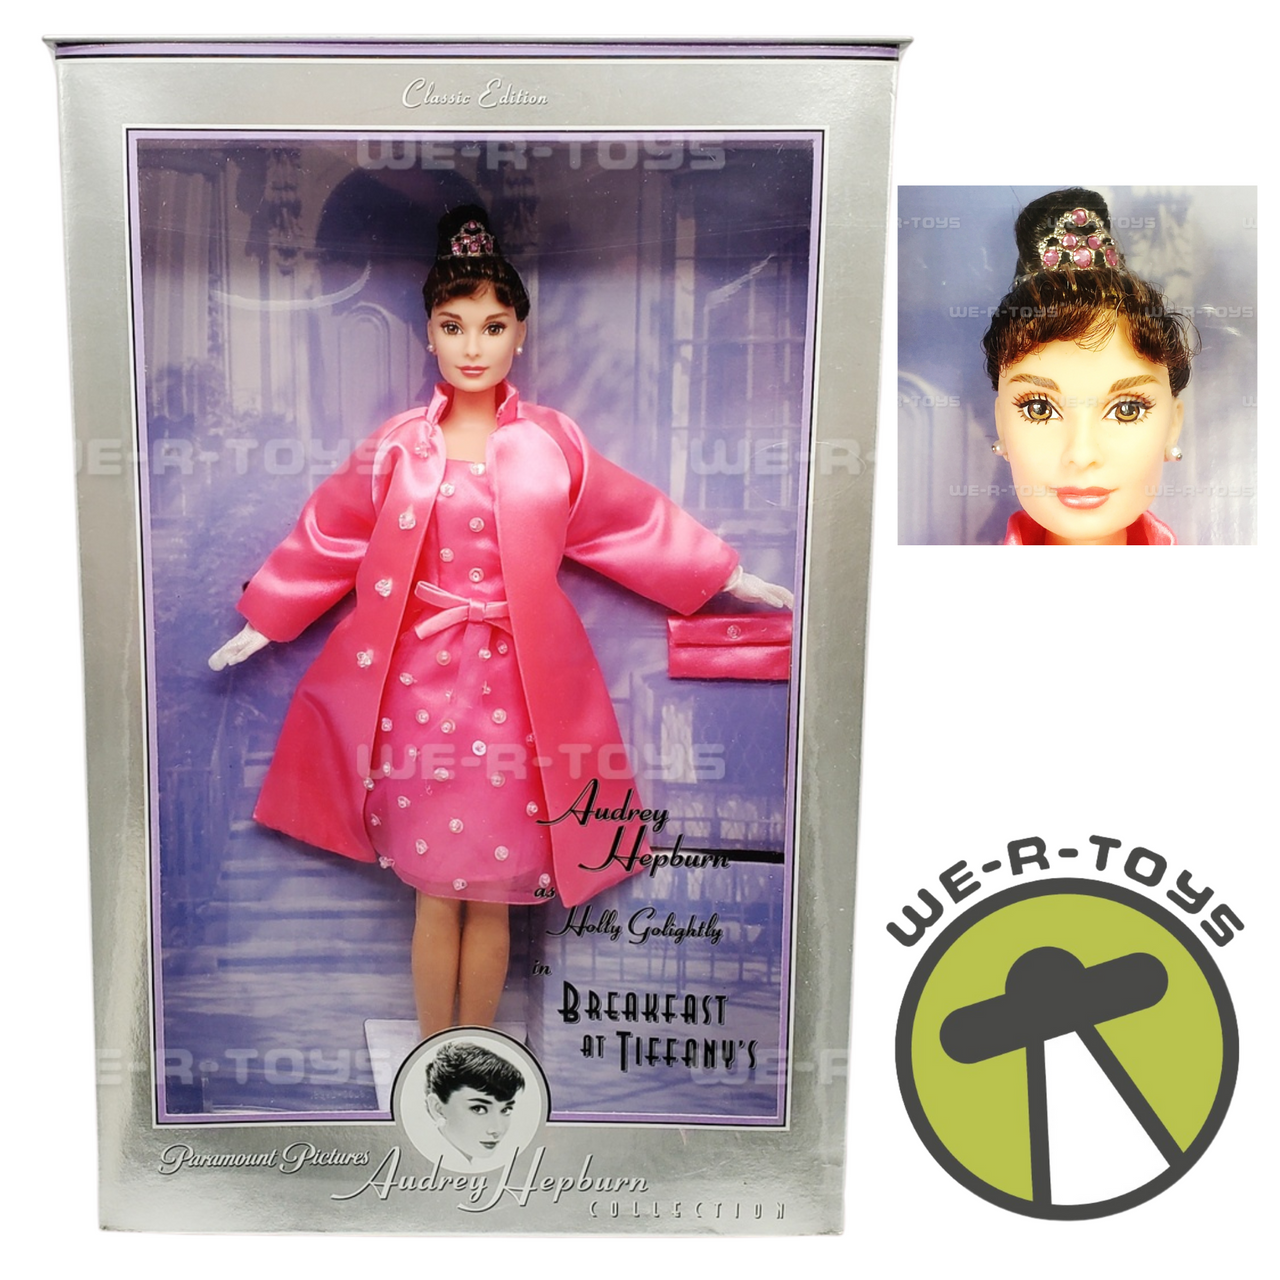 Barbie Audrey Hepburn in Breakfast at Tiffany's Pink PrincessTM Fashion